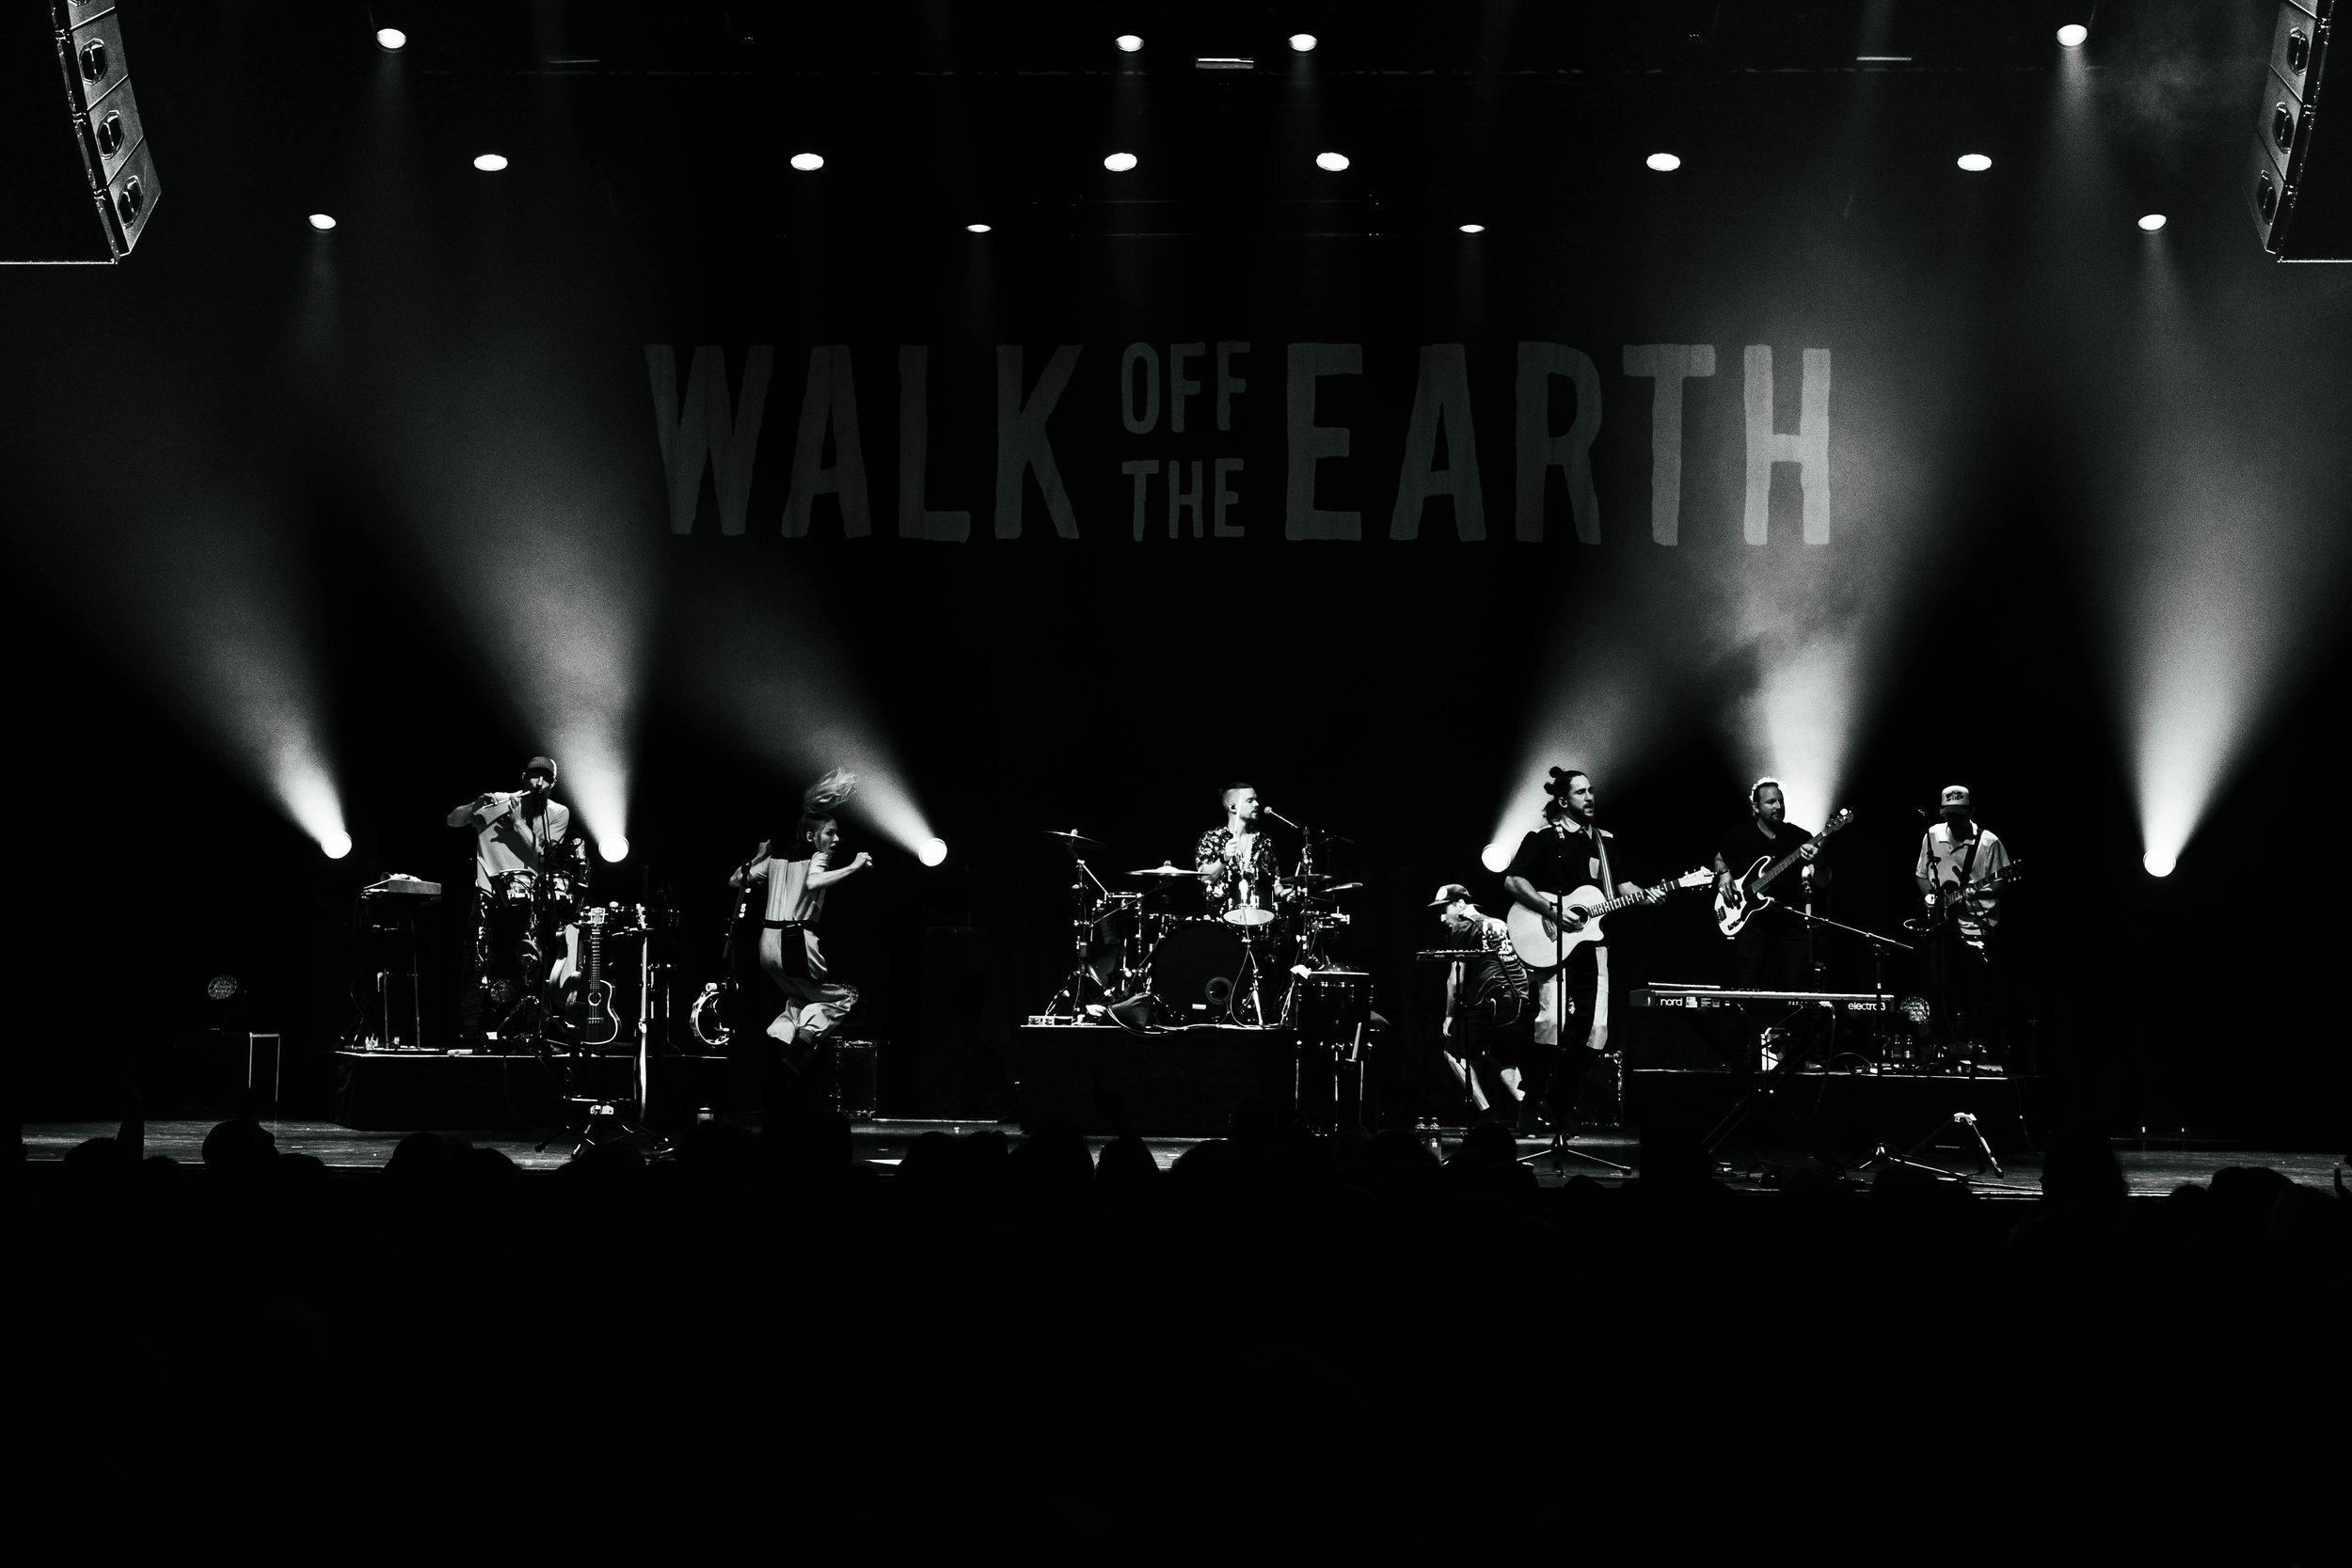 Walk Off The Earth